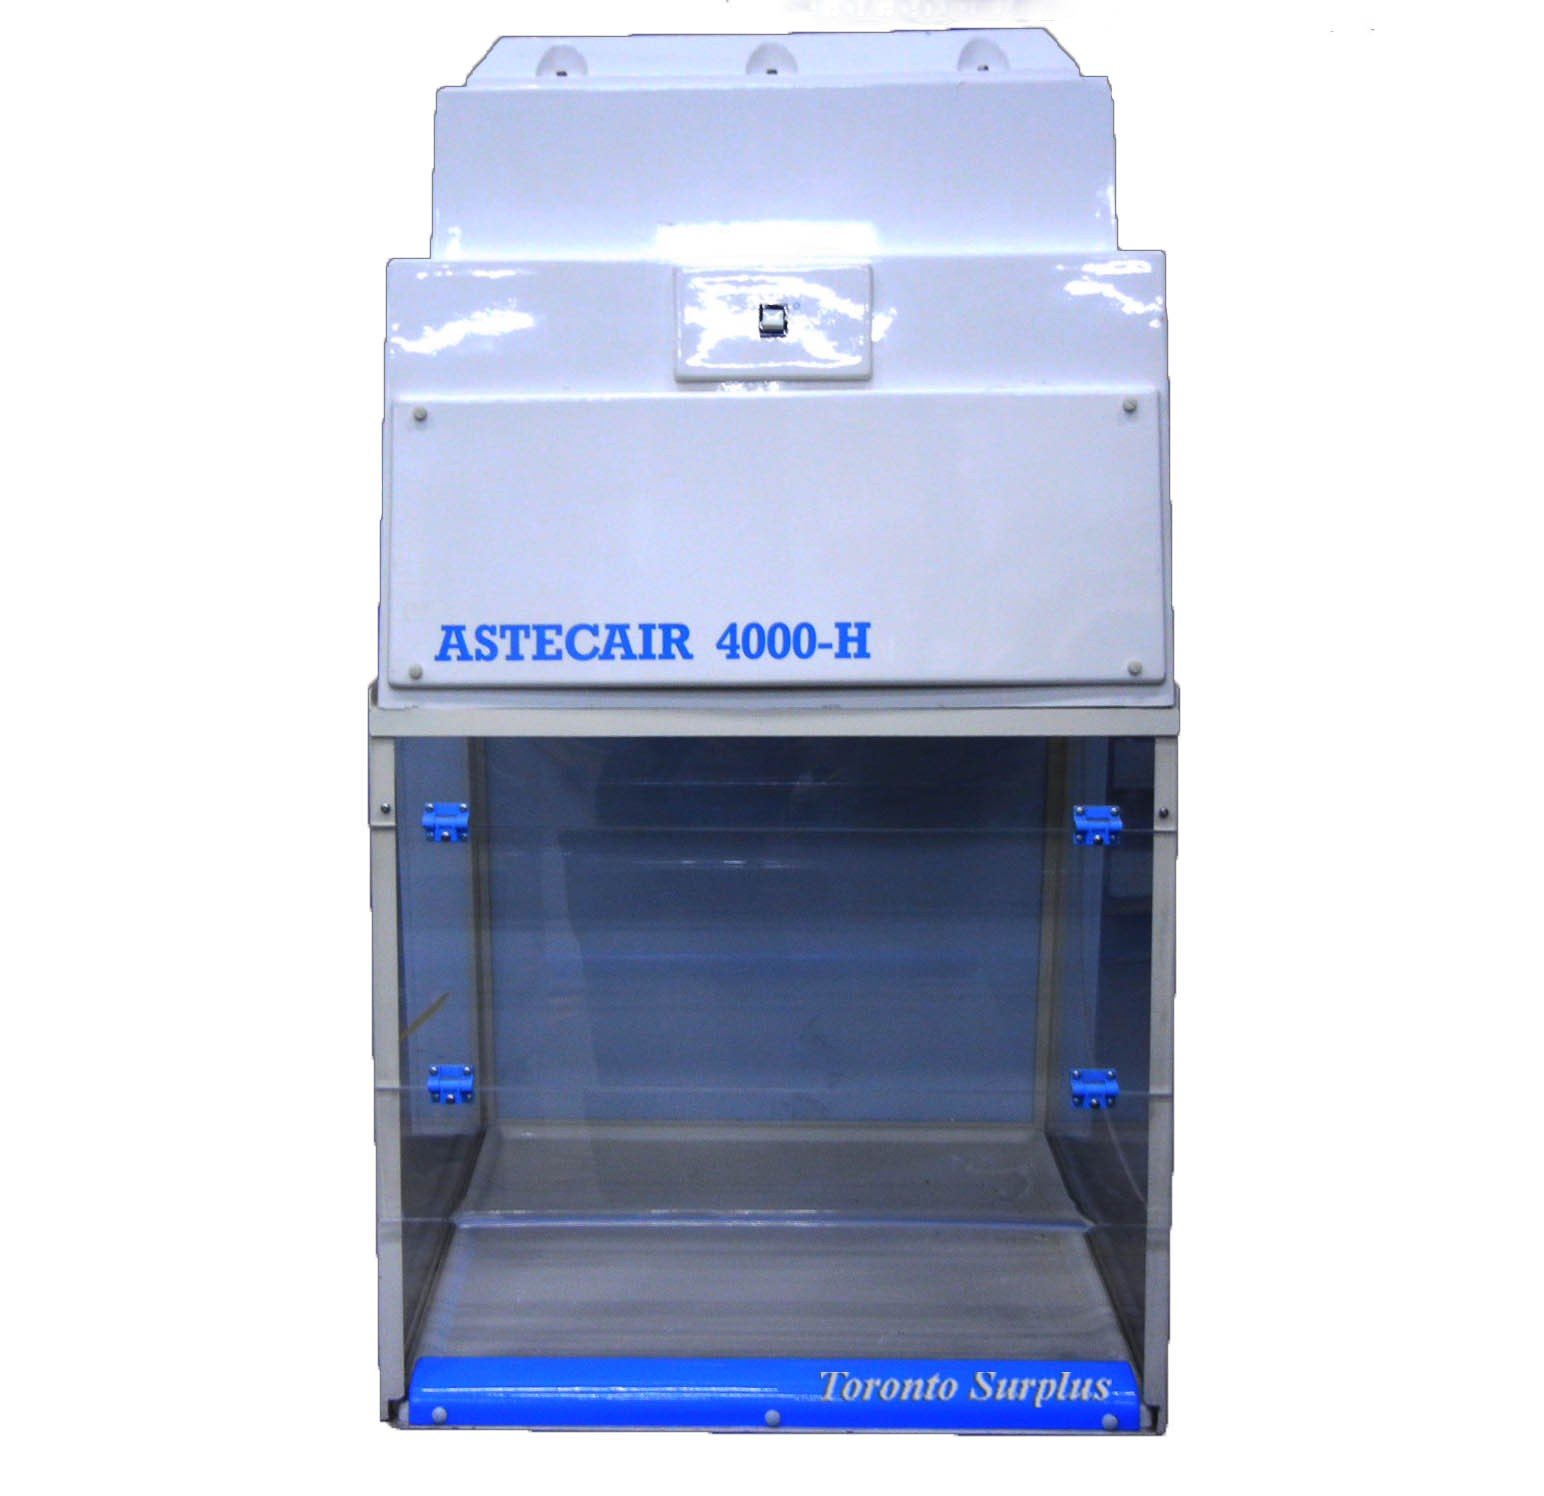 Astecair 4000-H Filter Fume Cupboard